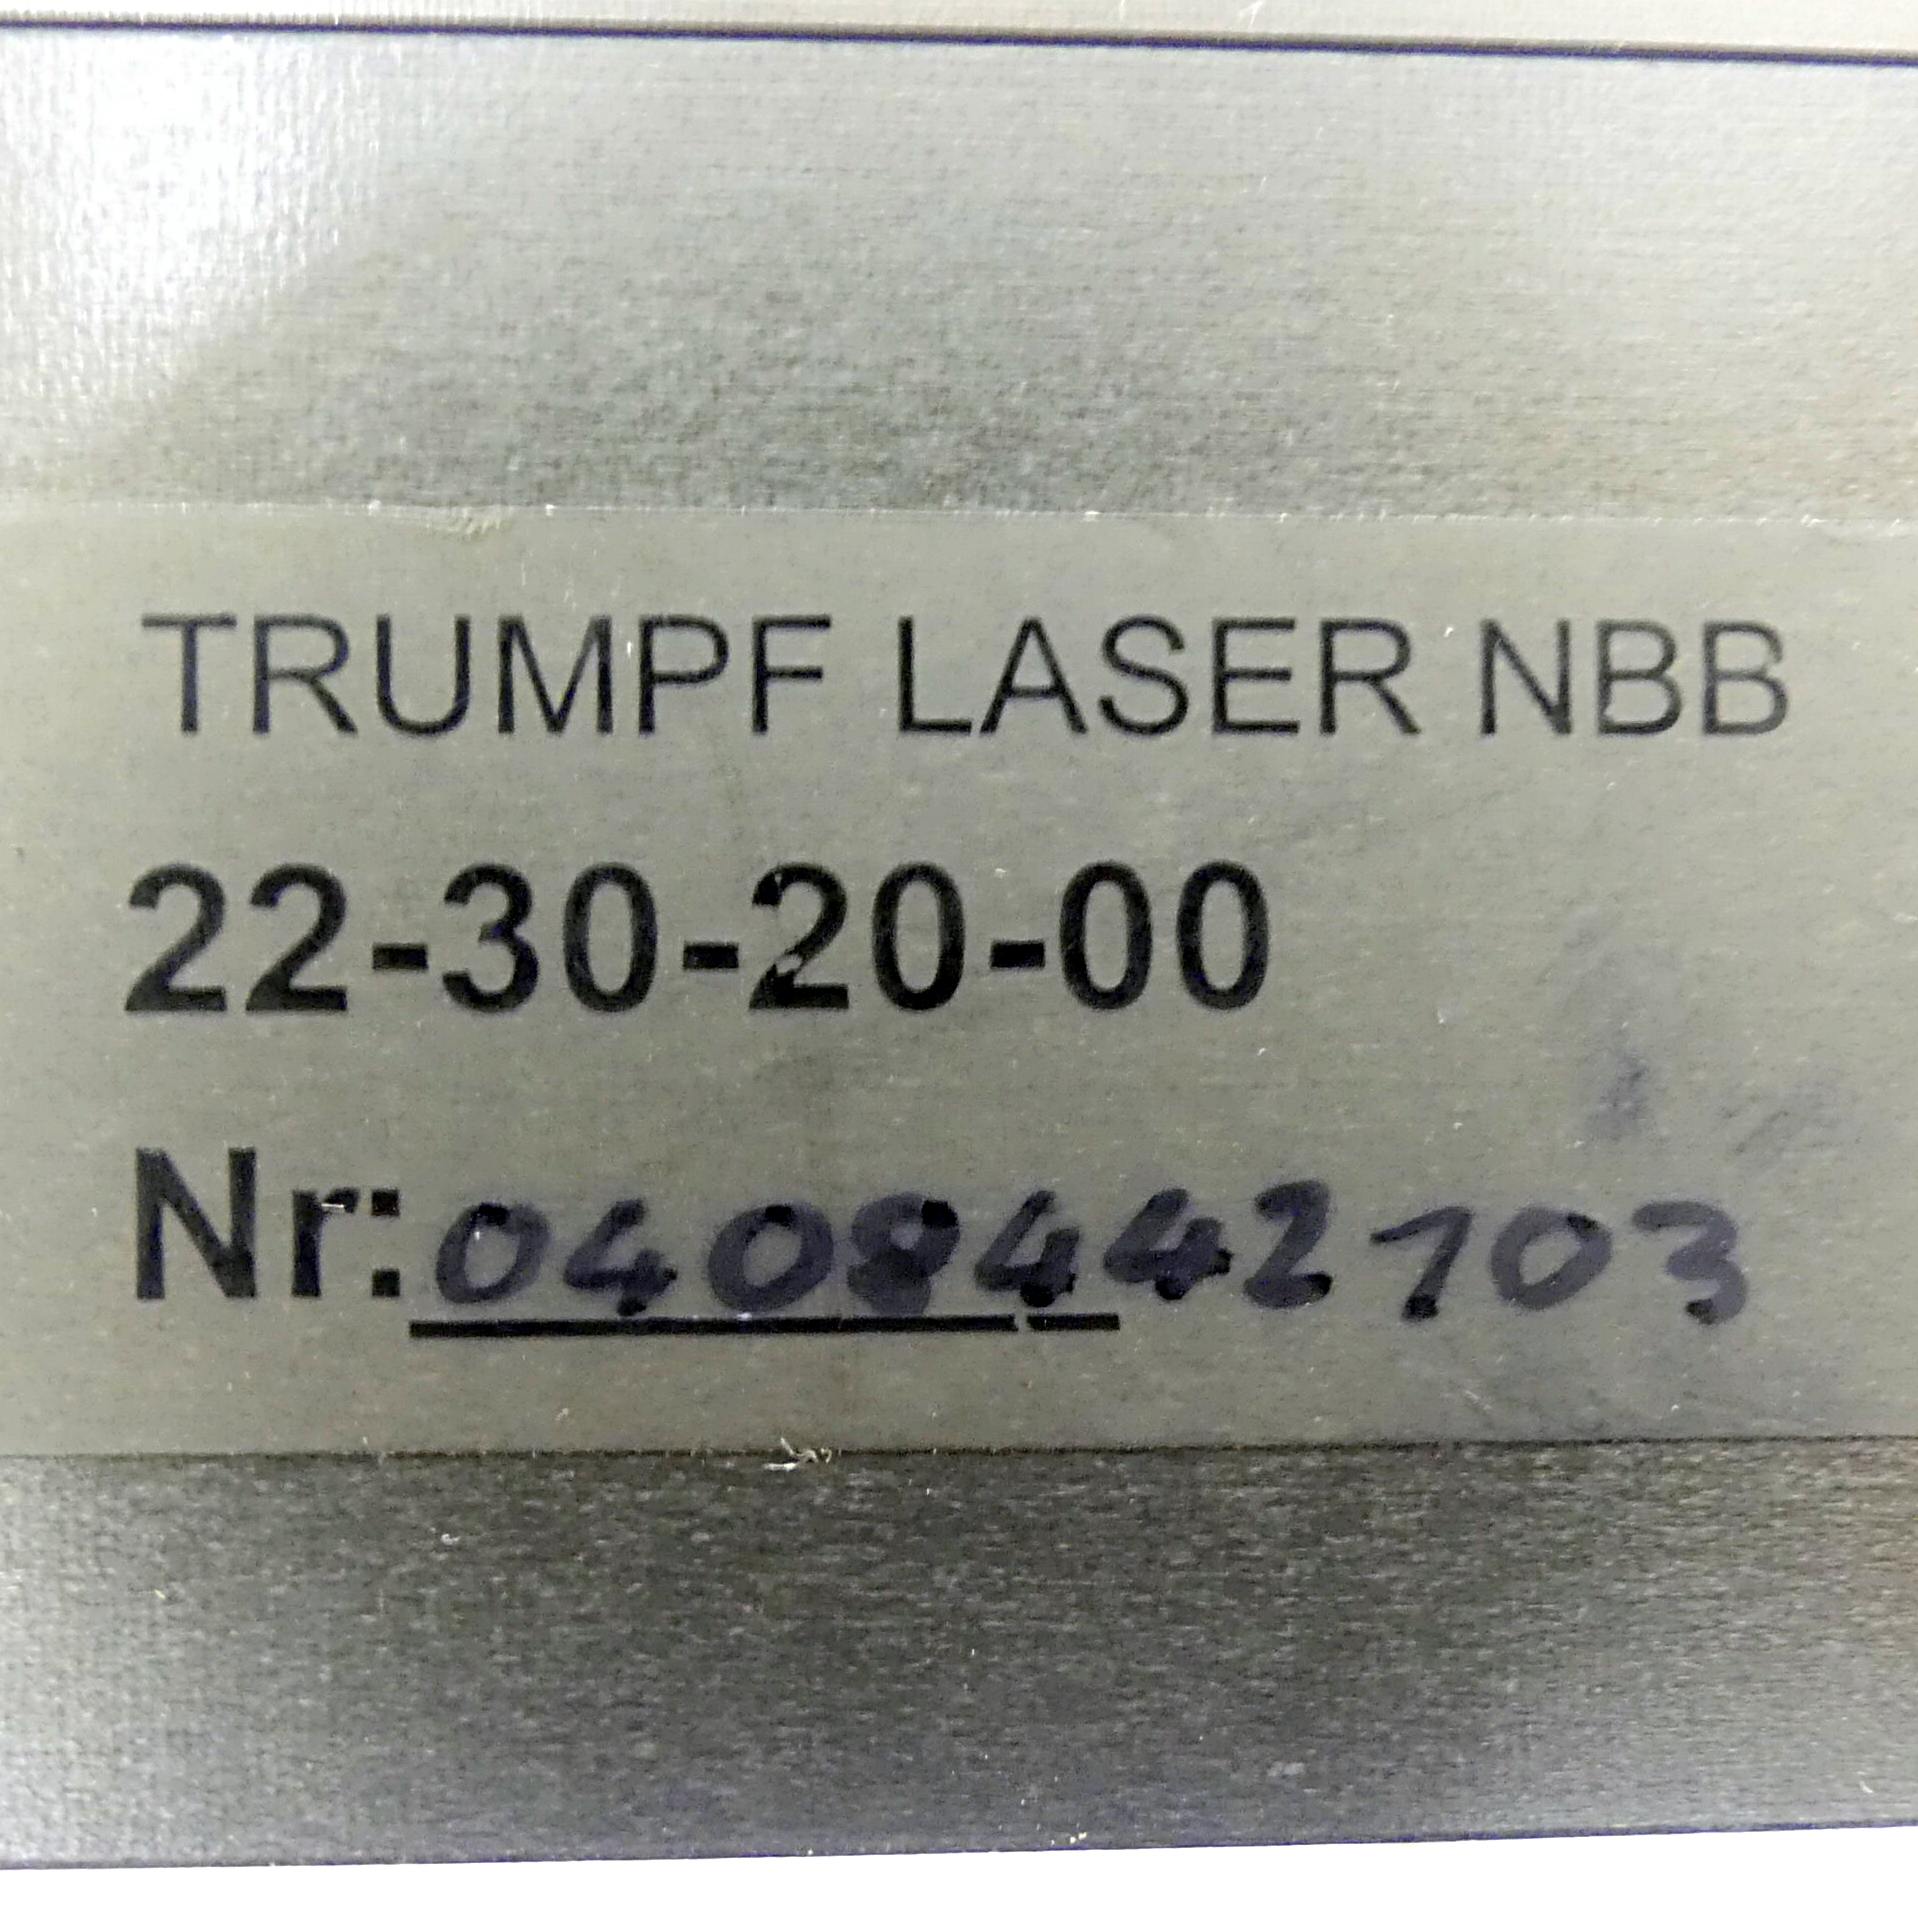 Laser NBB 22-30-20-00 